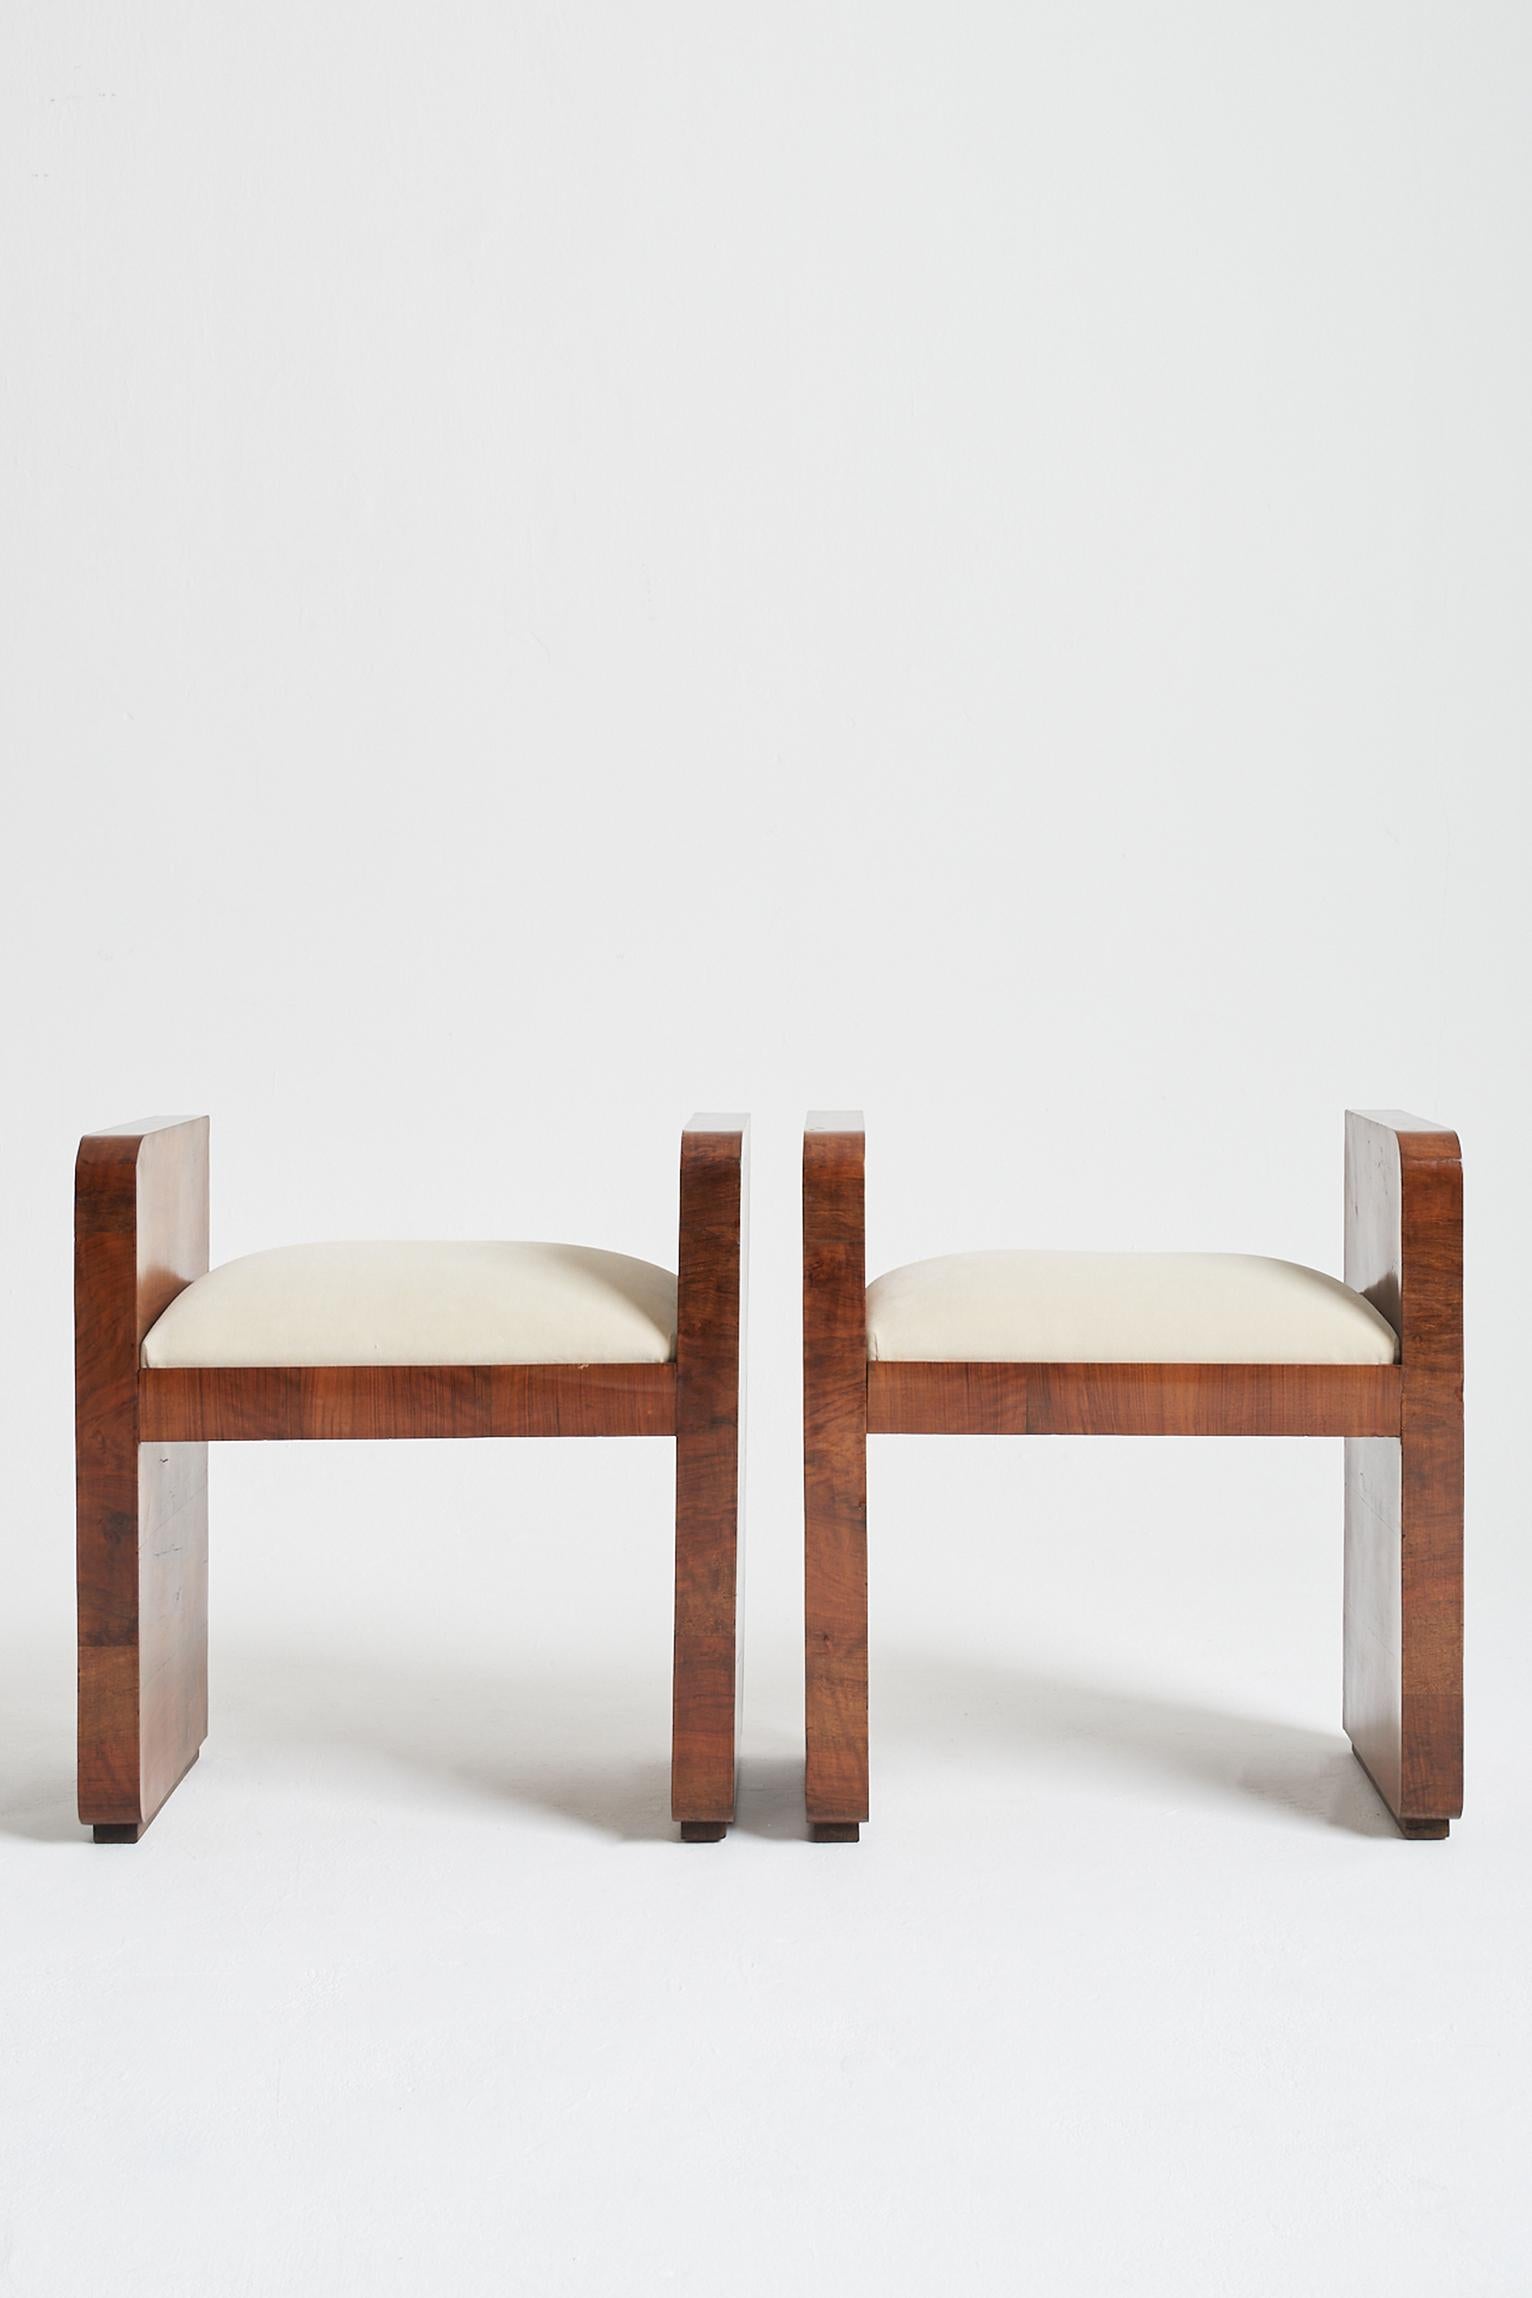 A pair of Art Deco walnut veneered stools, upholstered in cream velvet.
France, circa 1930.